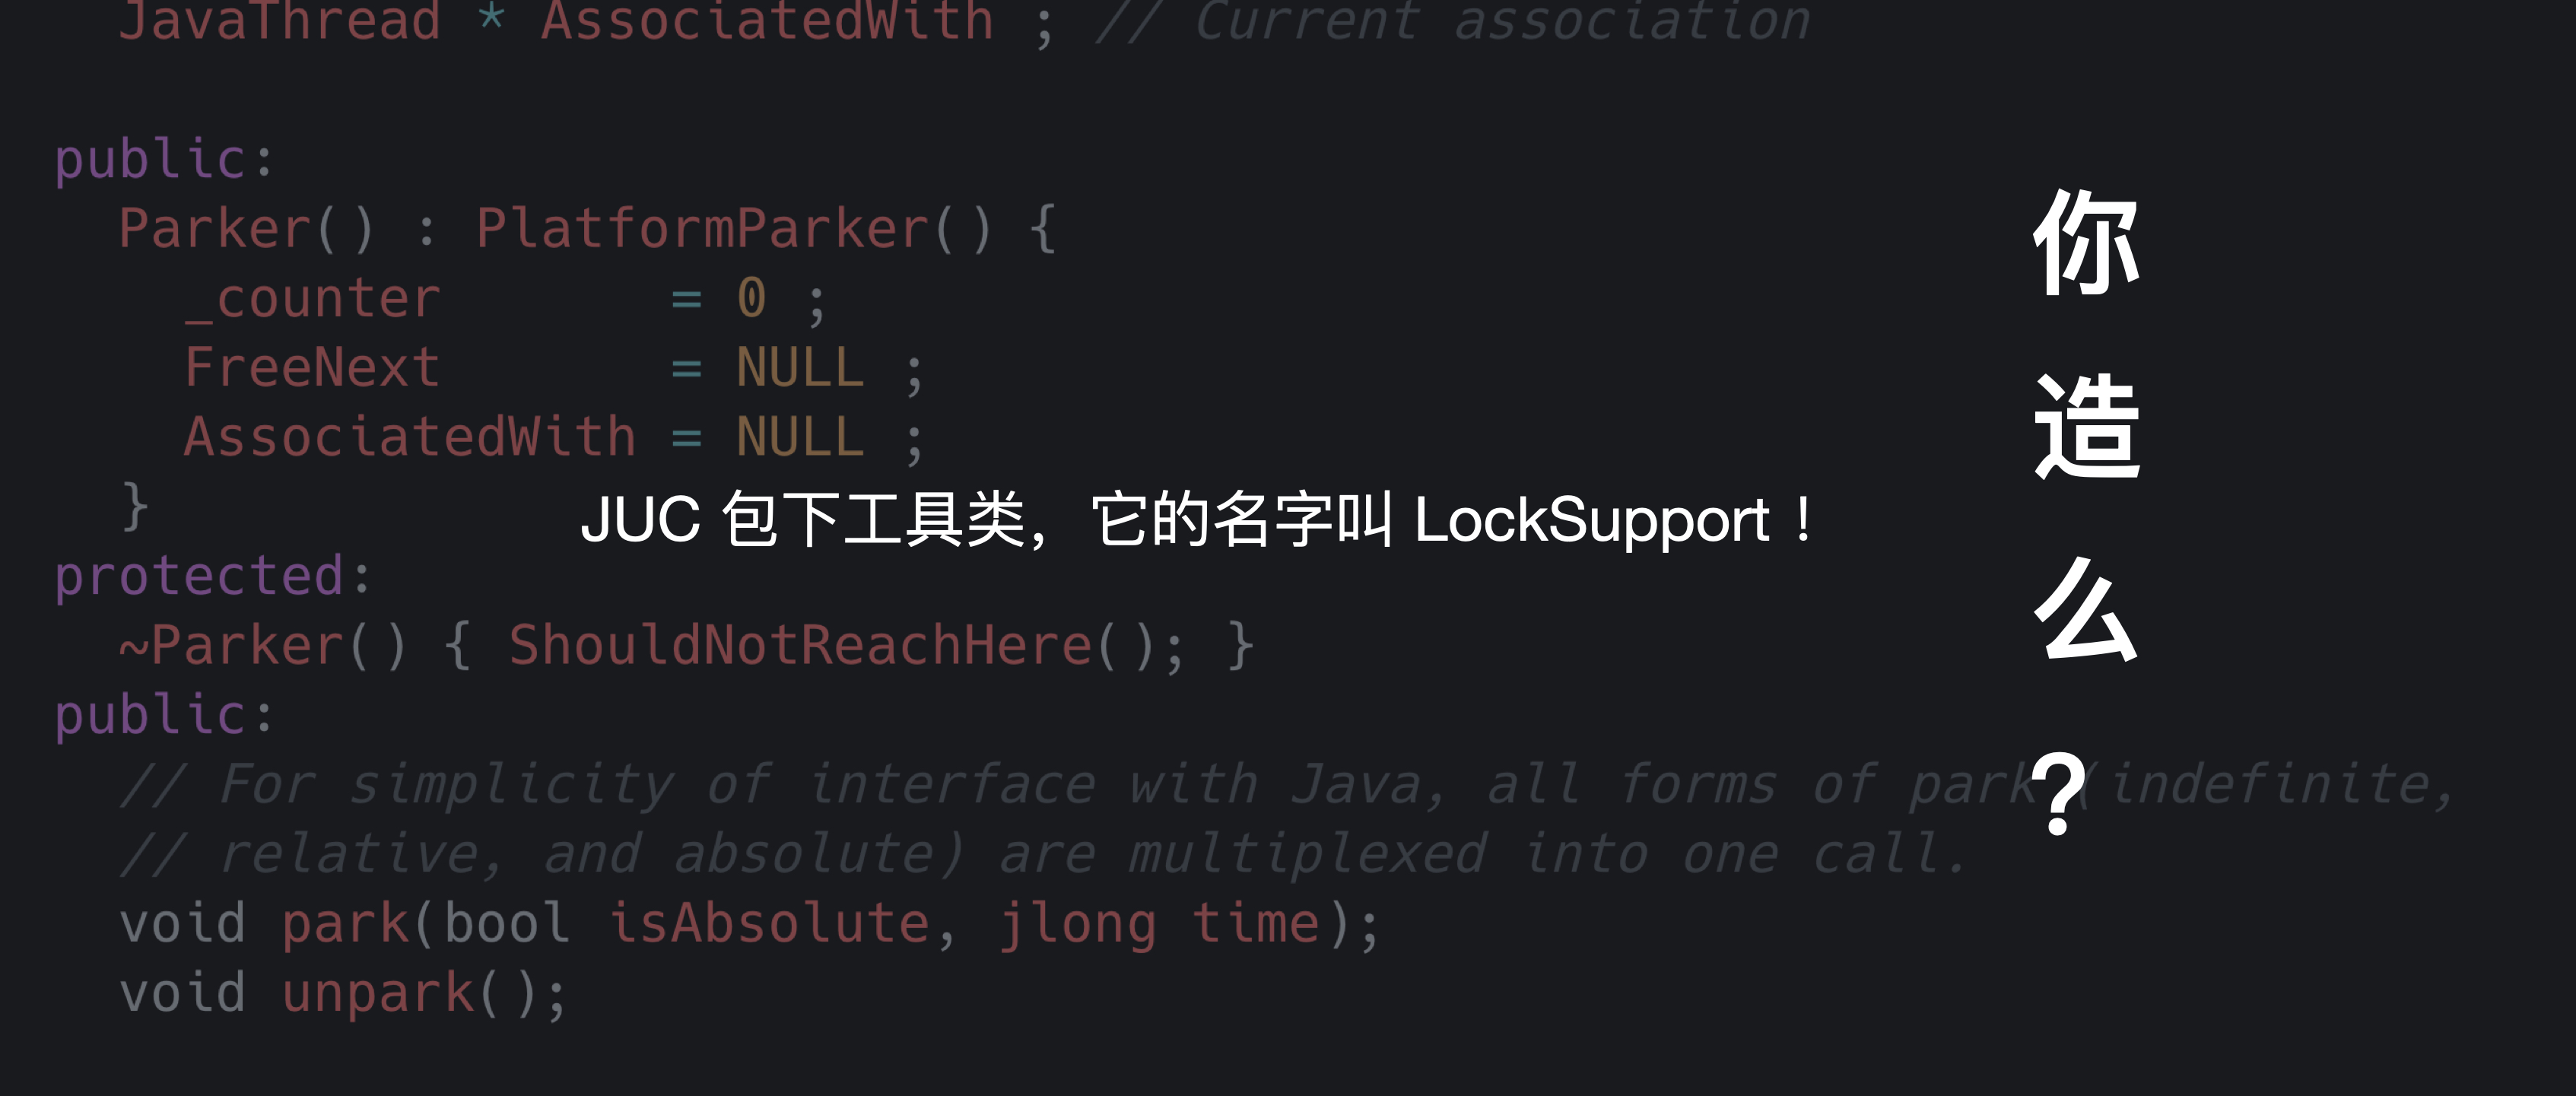 【JDK源码笔记】- JUC 包下工具类，它的名字叫 LockSupport ！你造么？